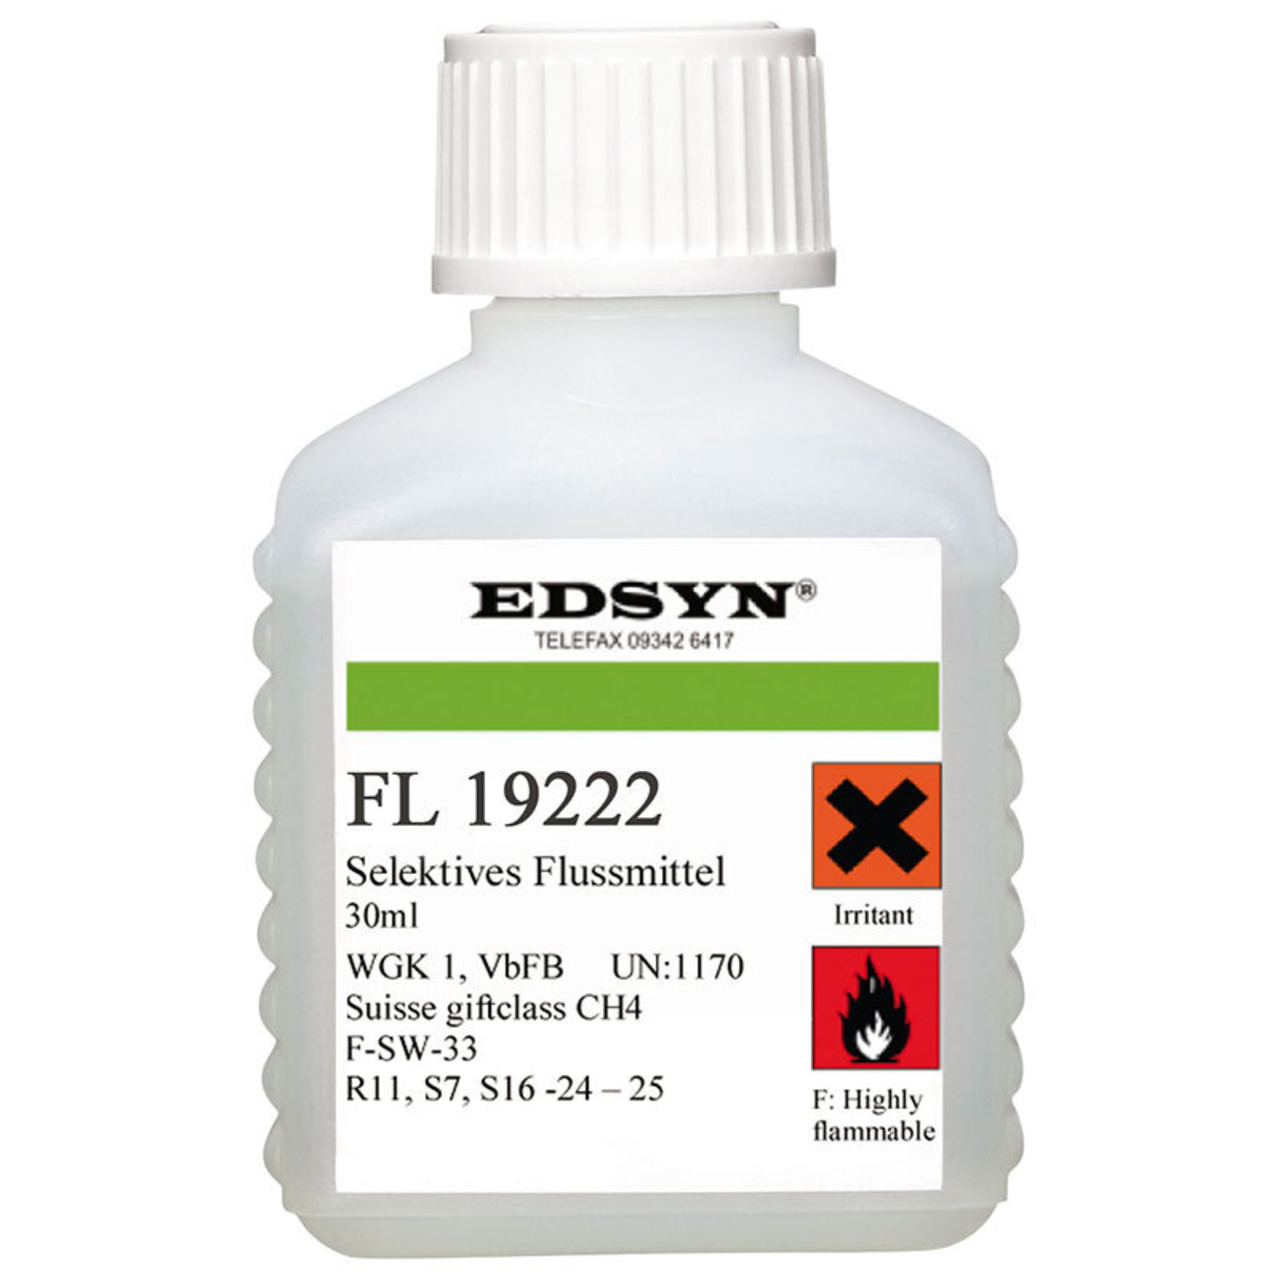 Edsyn Fluxi Flussmittel in Pinselflasche- 30 ml